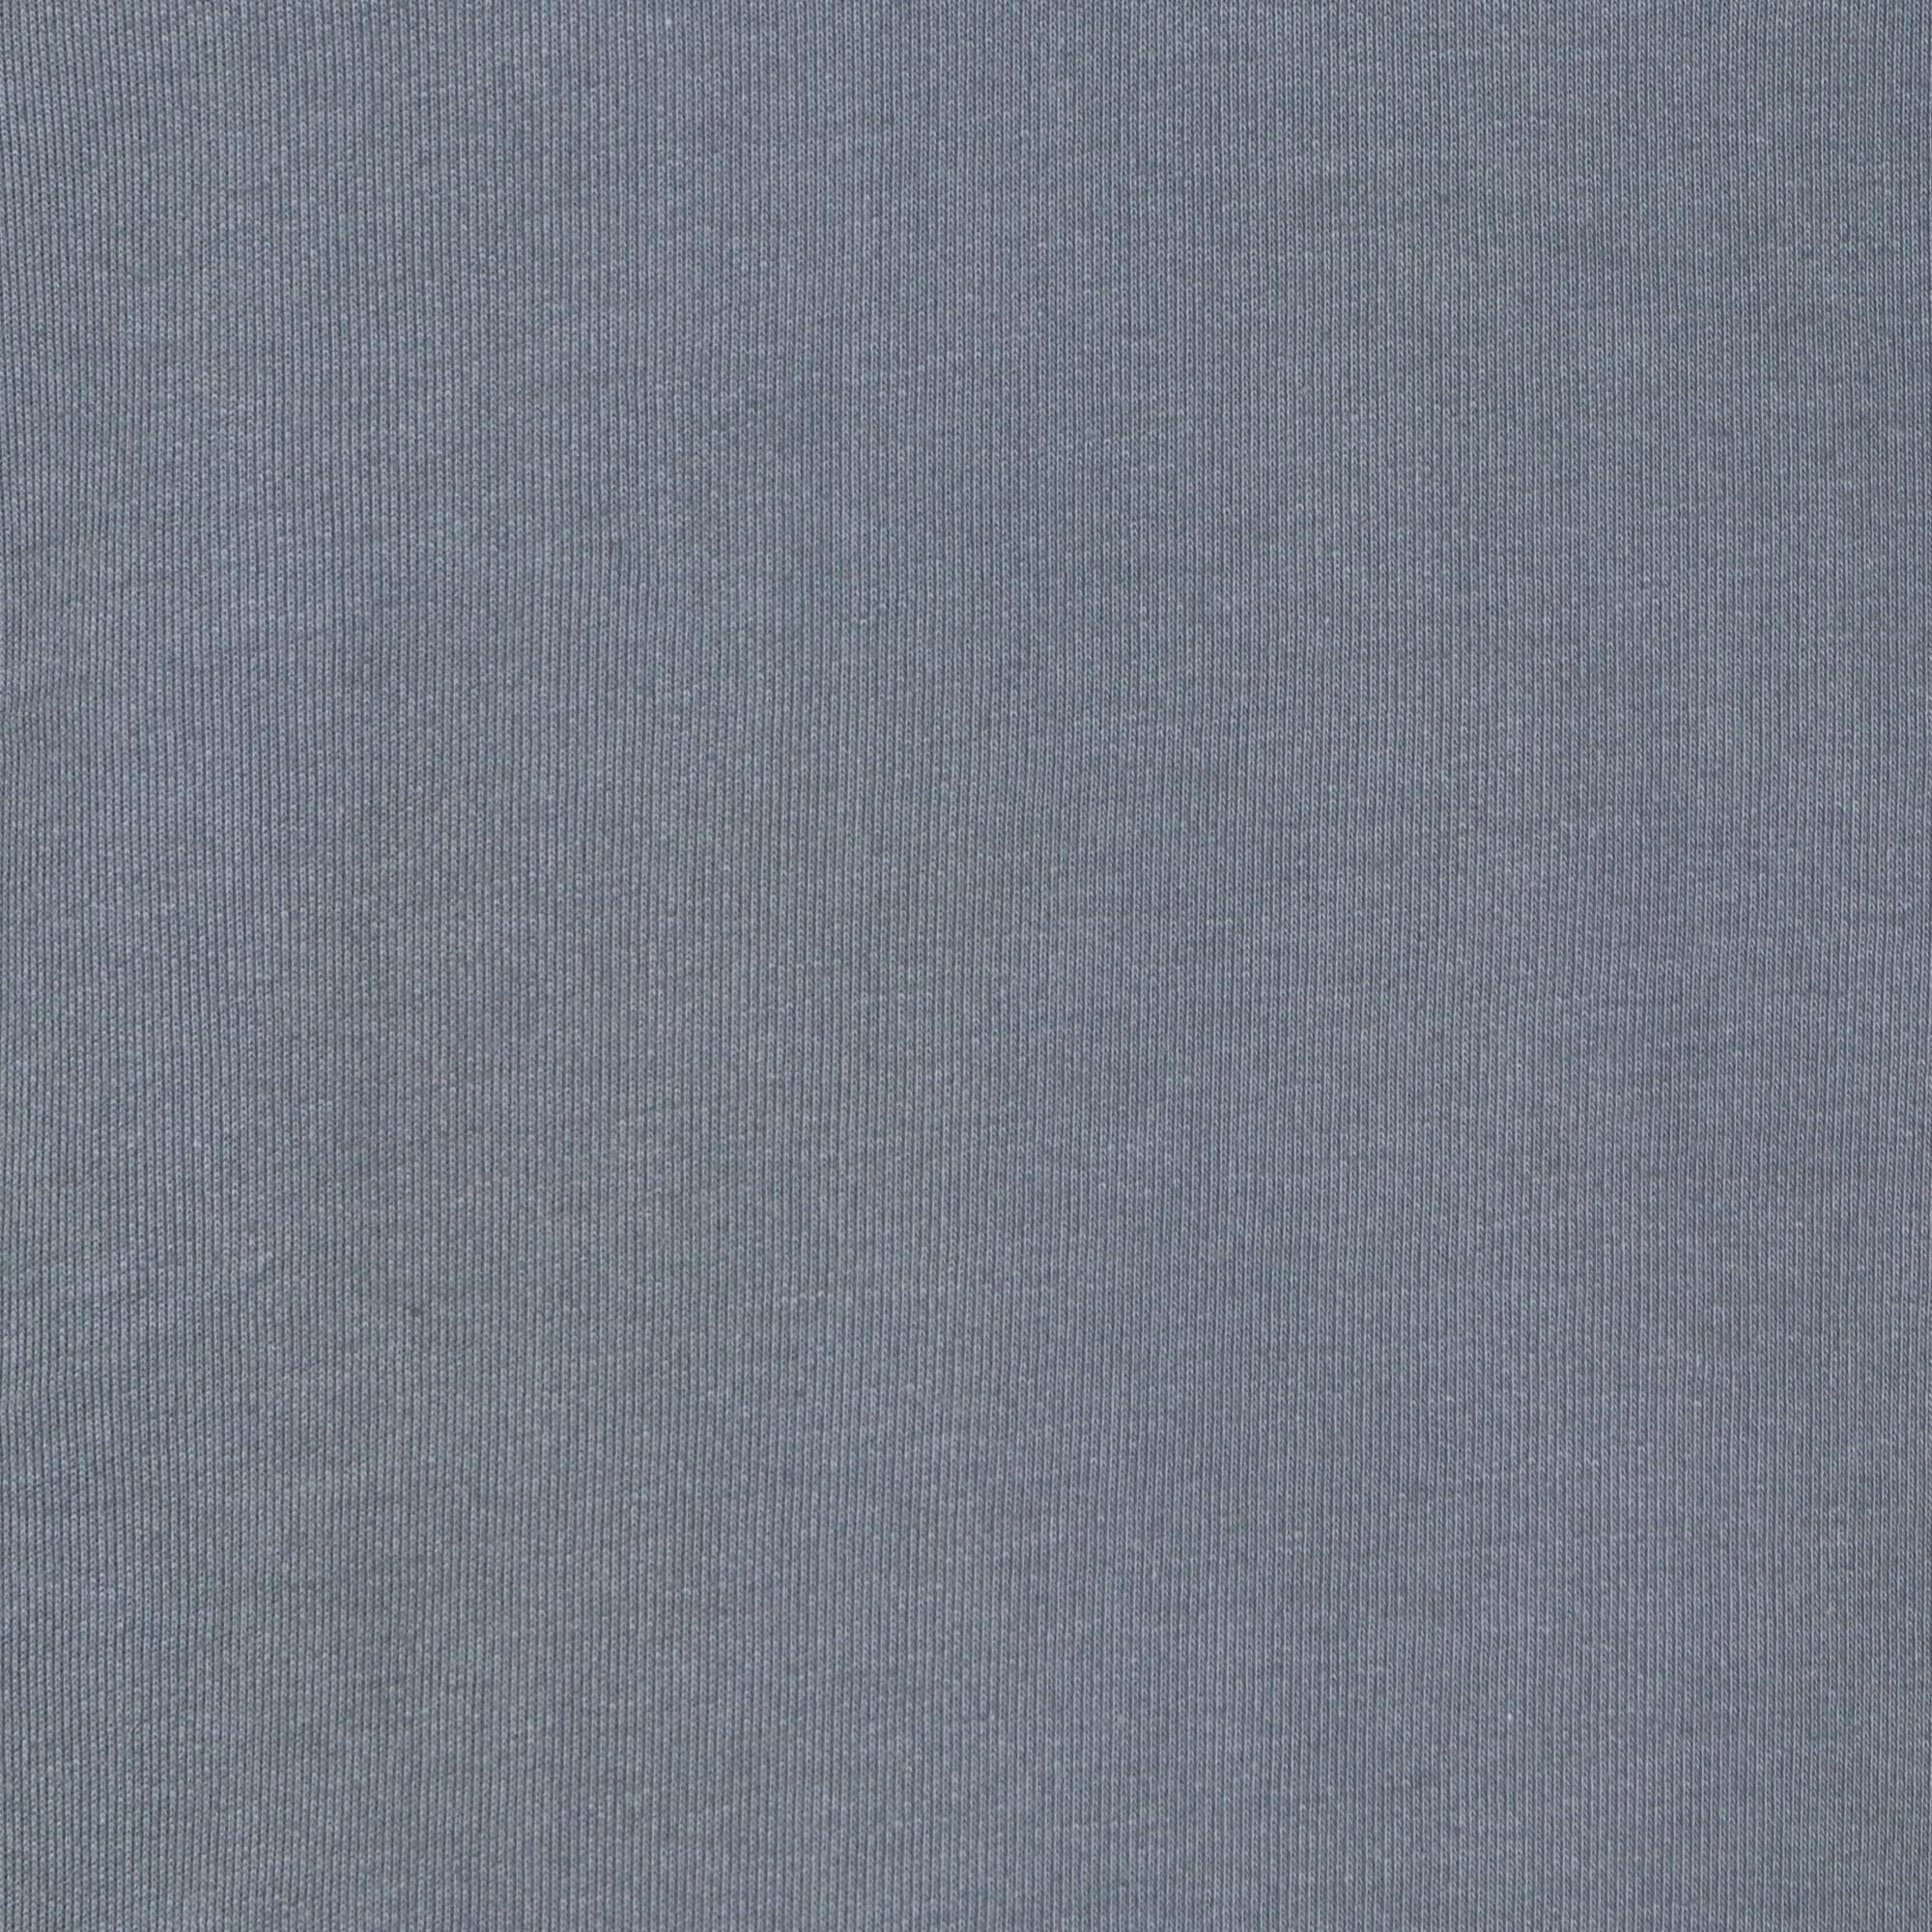 Мужская футболка-поло Diva Teks серая (DTD-11), цвет серый, размер 44-46 - фото 6